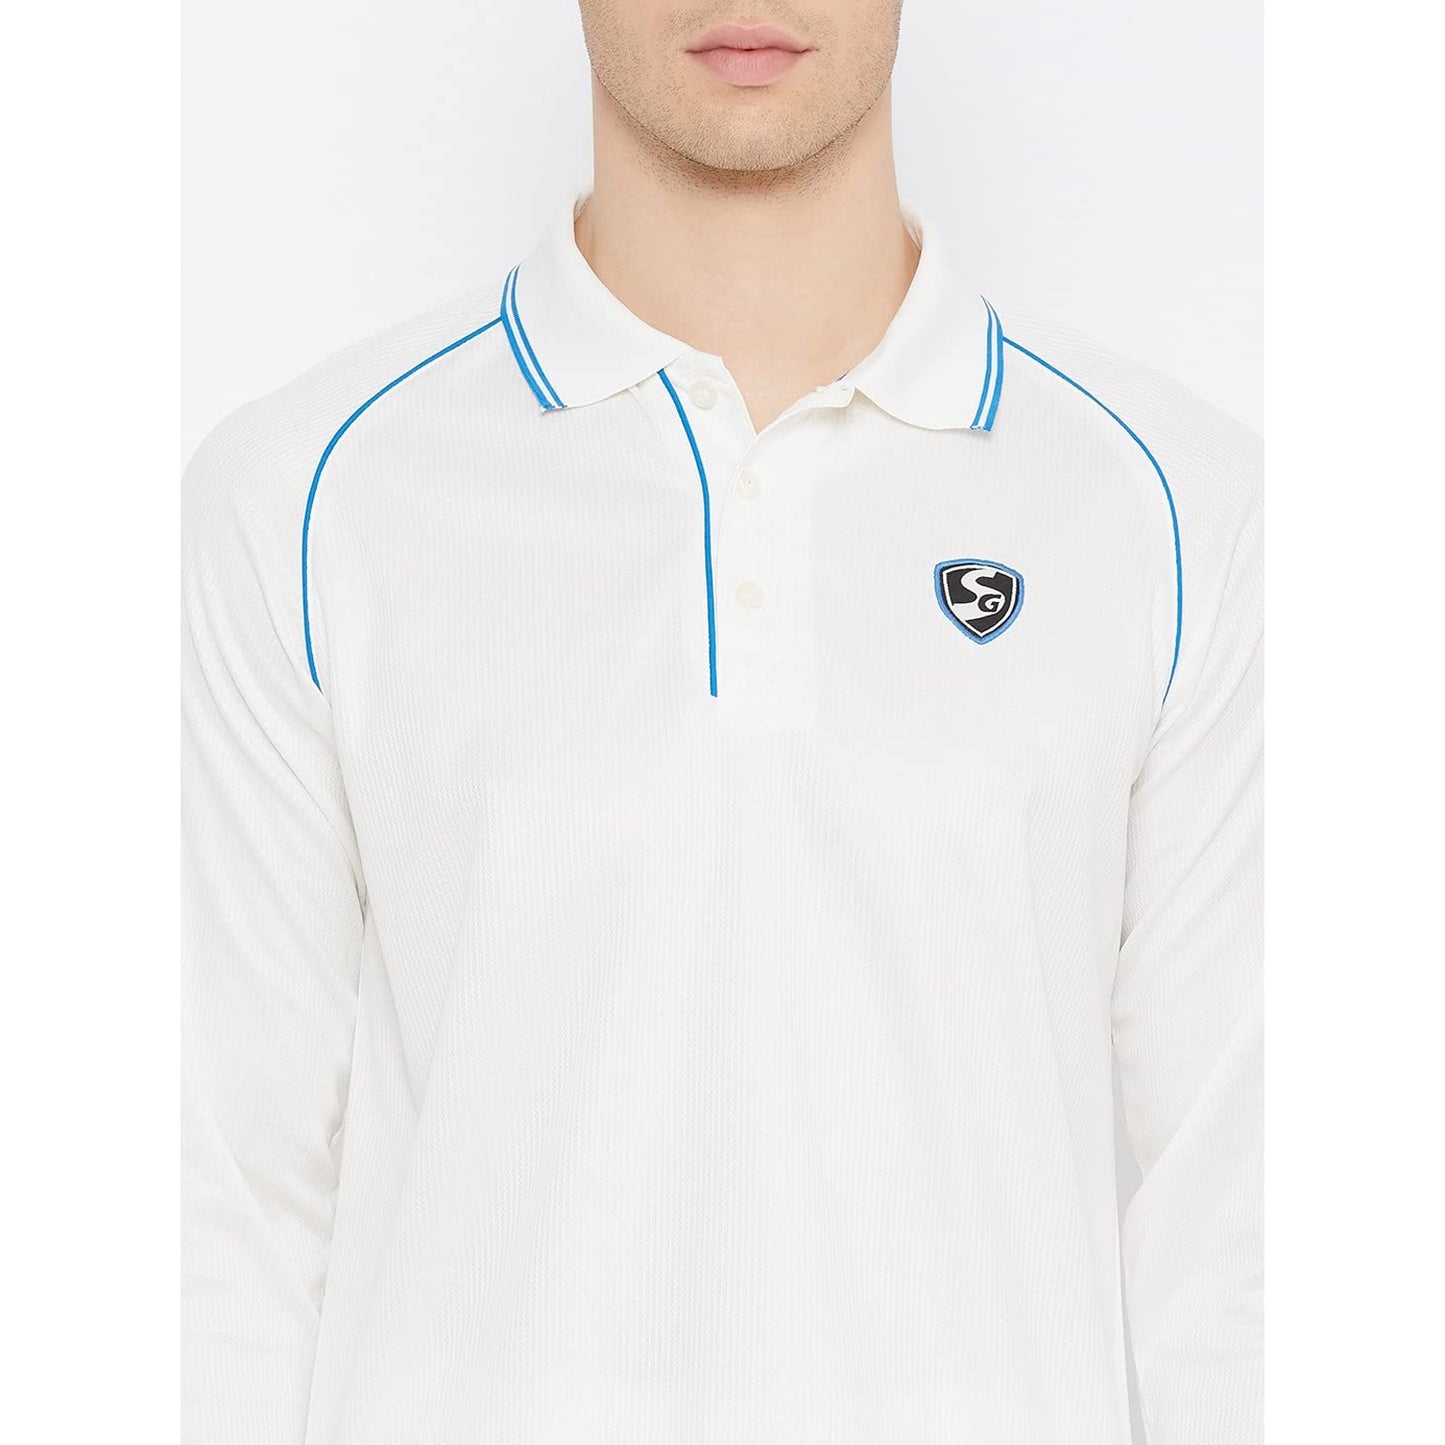 SG Legend Cricket Tshirt, Full Sleeves - Best Price online Prokicksports.com